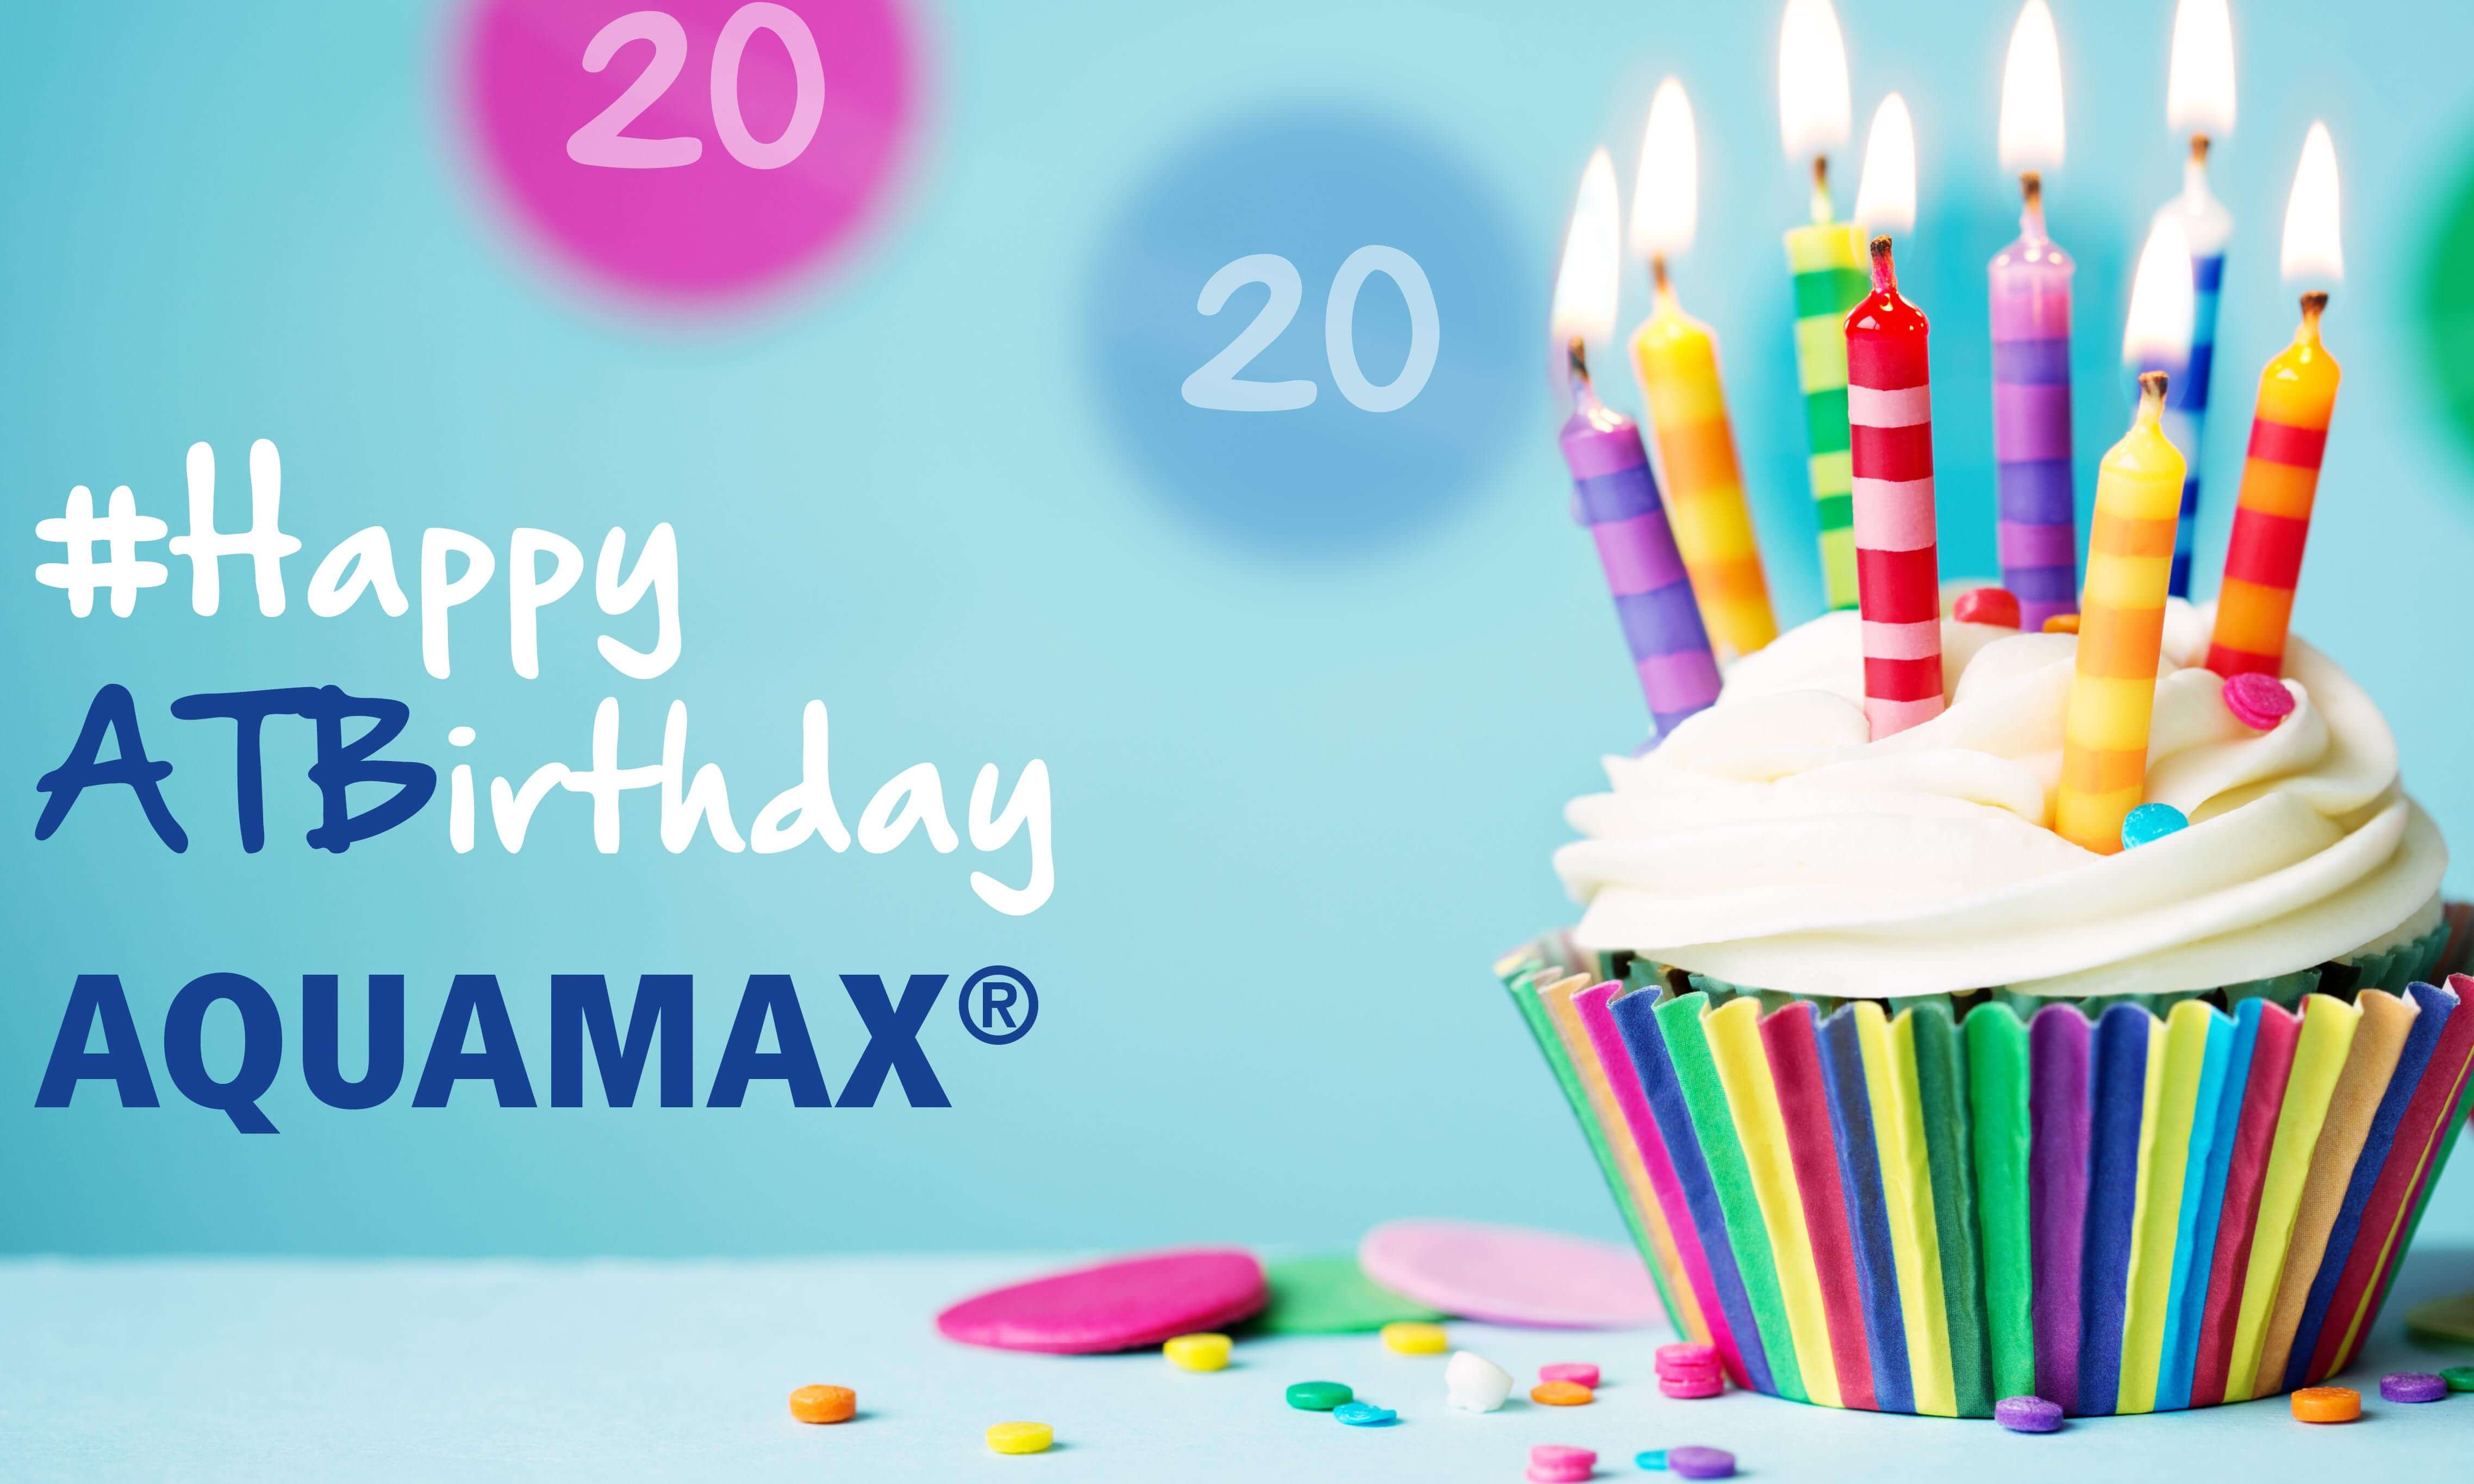 Happy ATBirthday - unser AQUAMAX ® wird 20